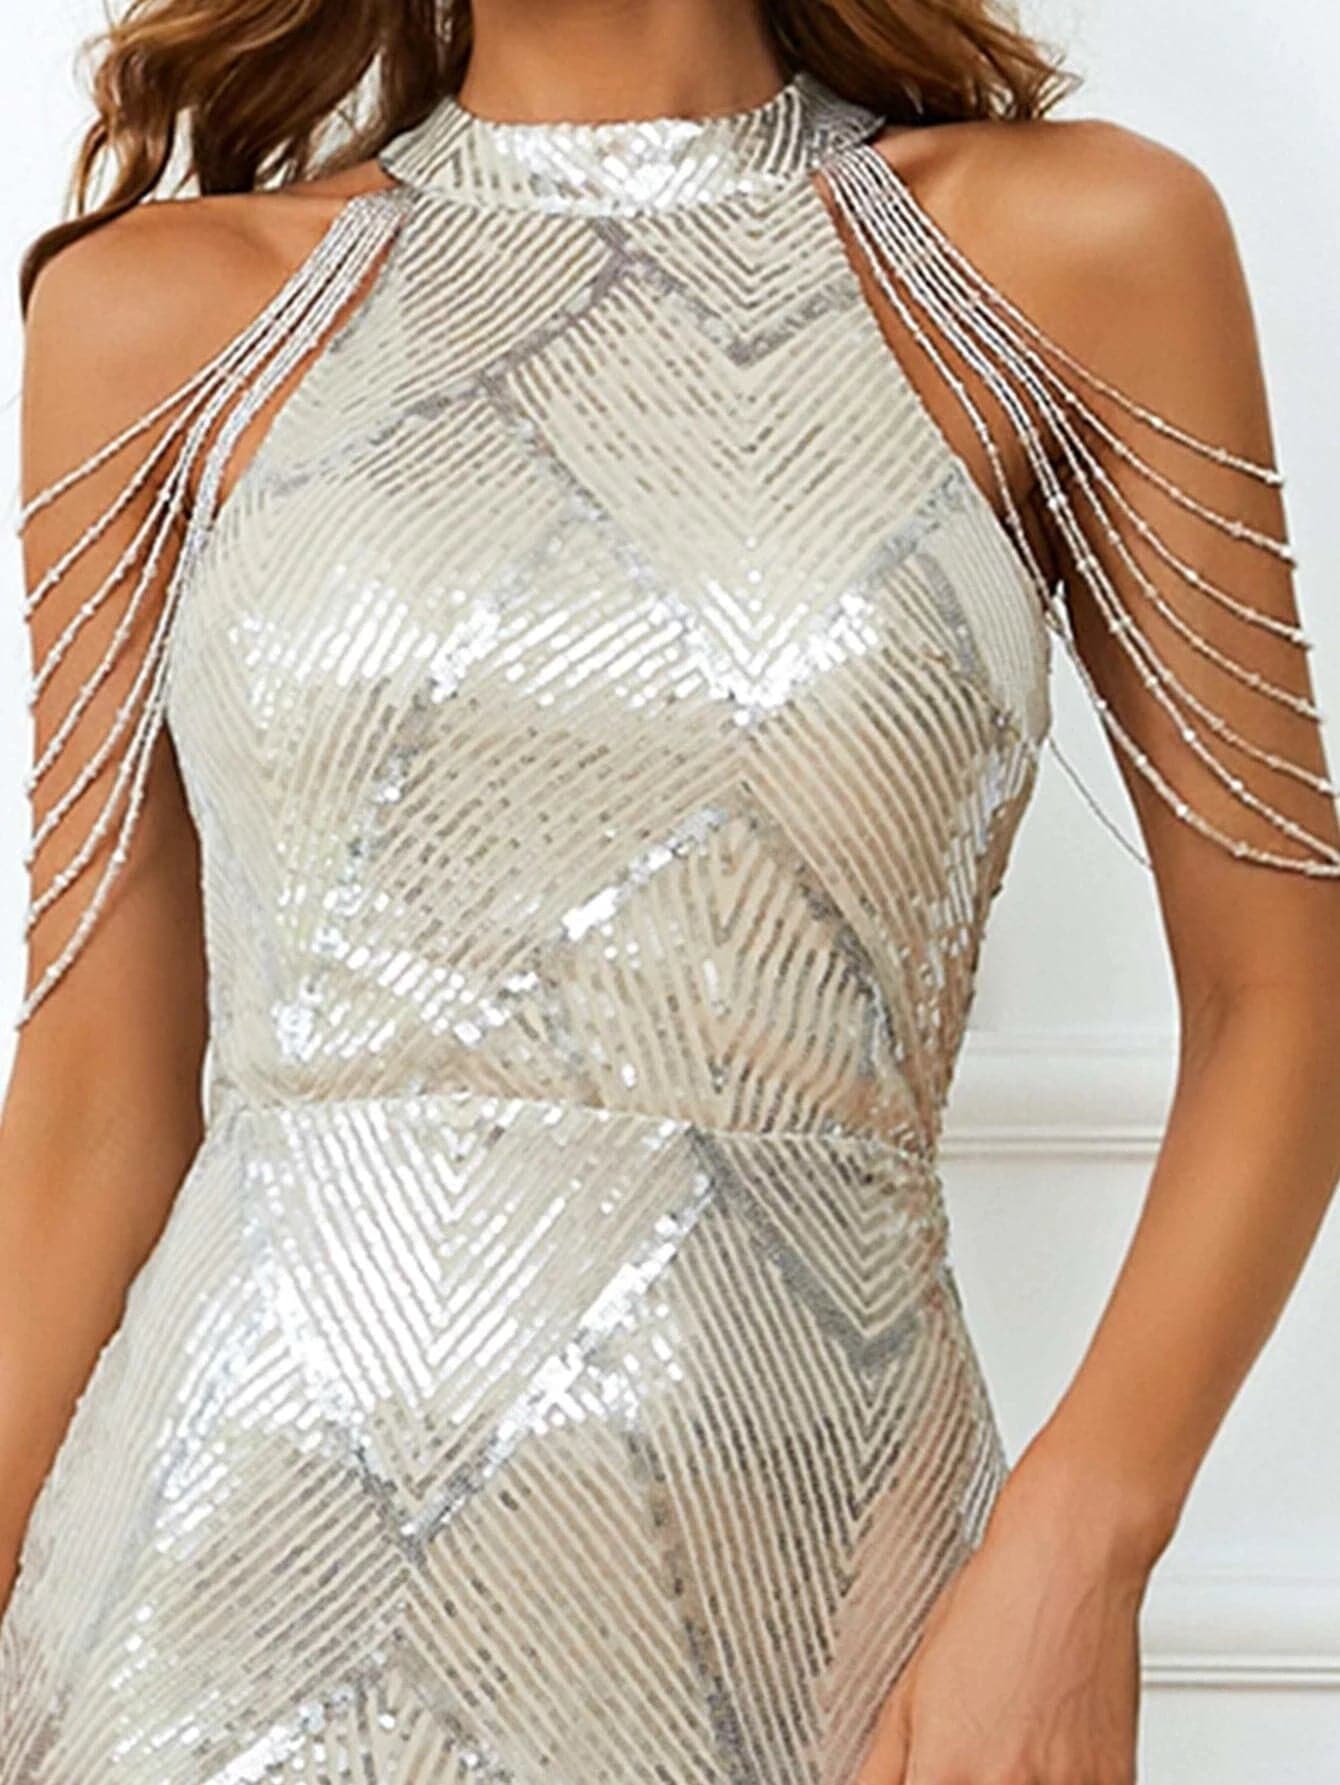 Halter Neck Sequin Mermaid Gold Prom Dress M01081